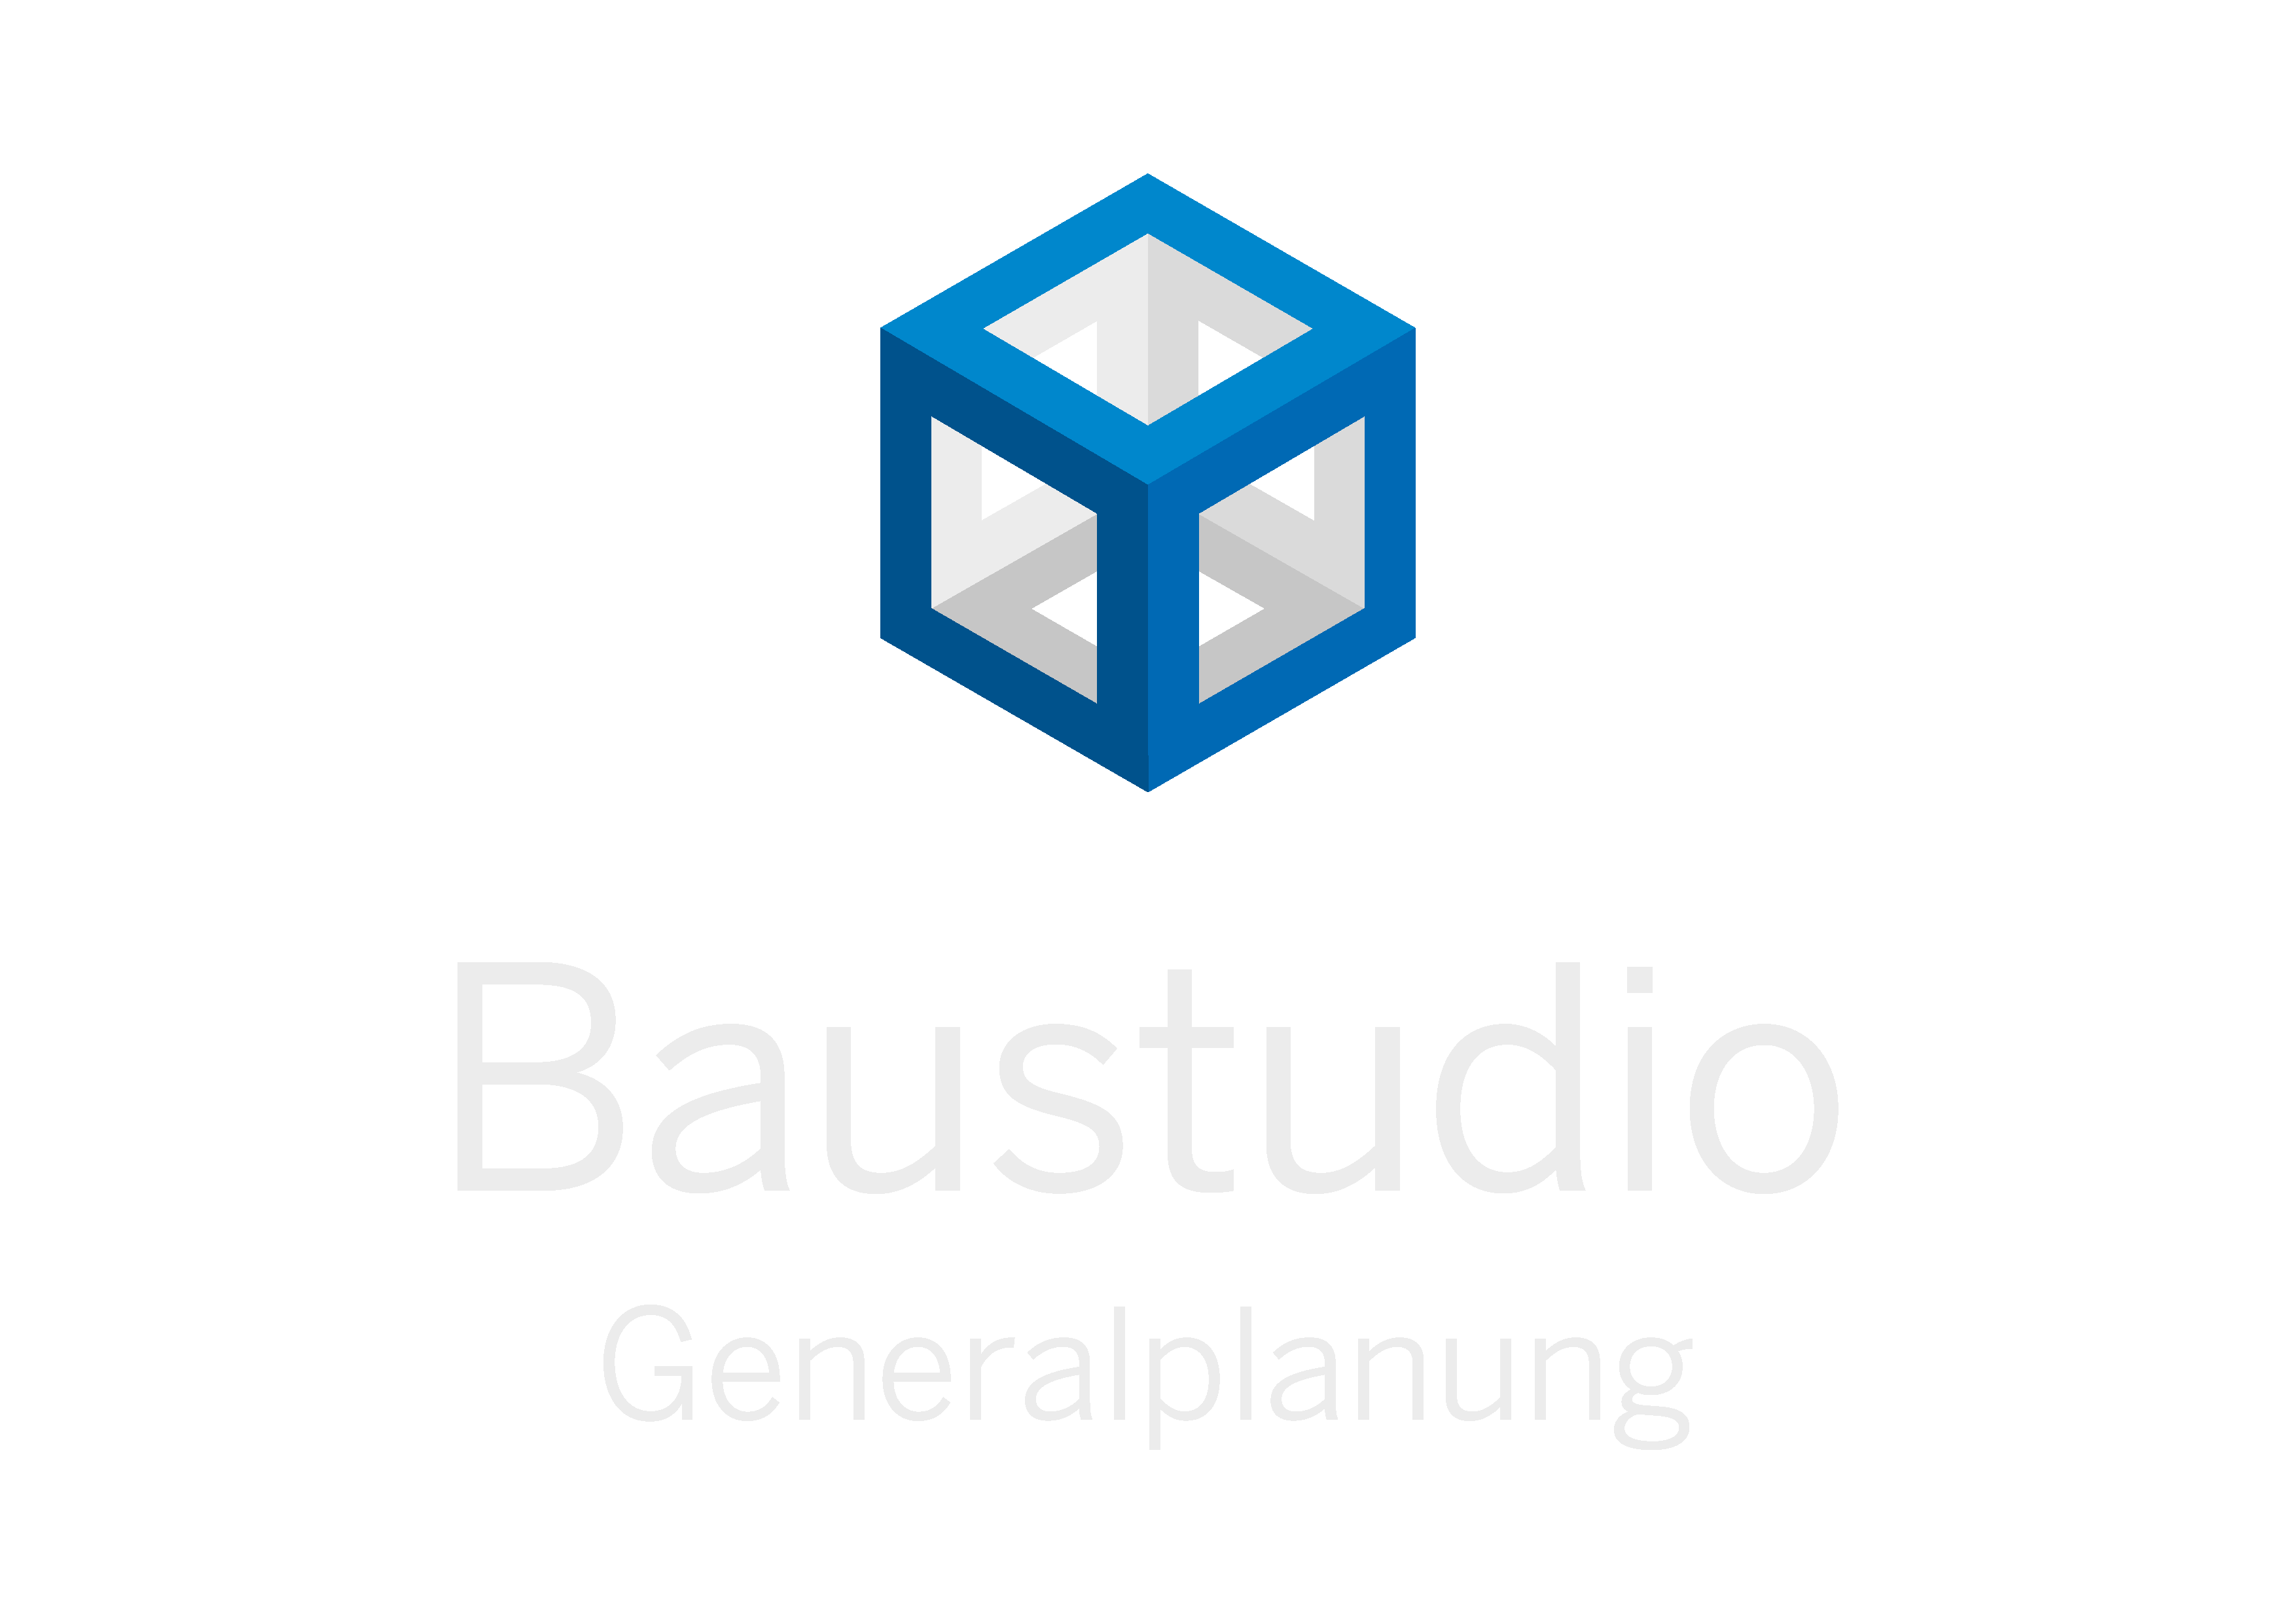 Baustudio GmbH